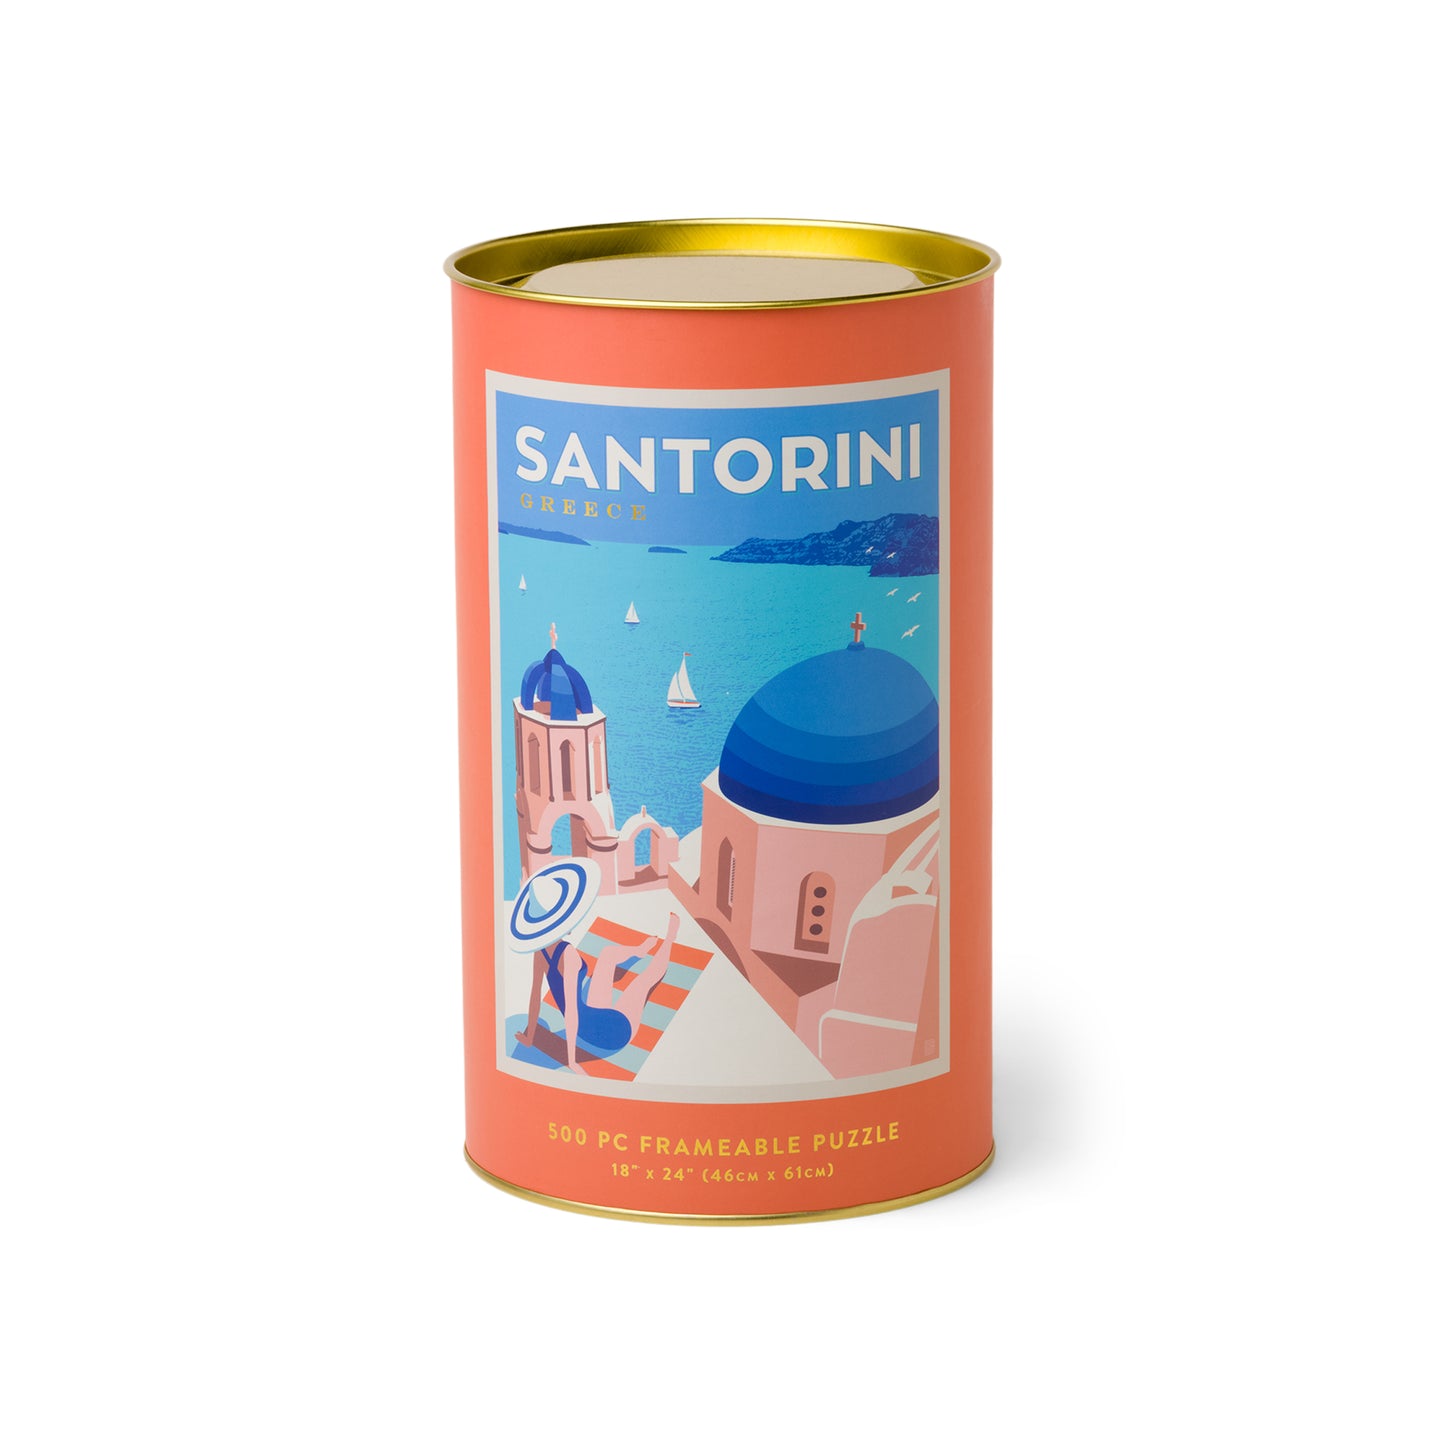 Santorini - puzzle in a tube | Designworks Ink